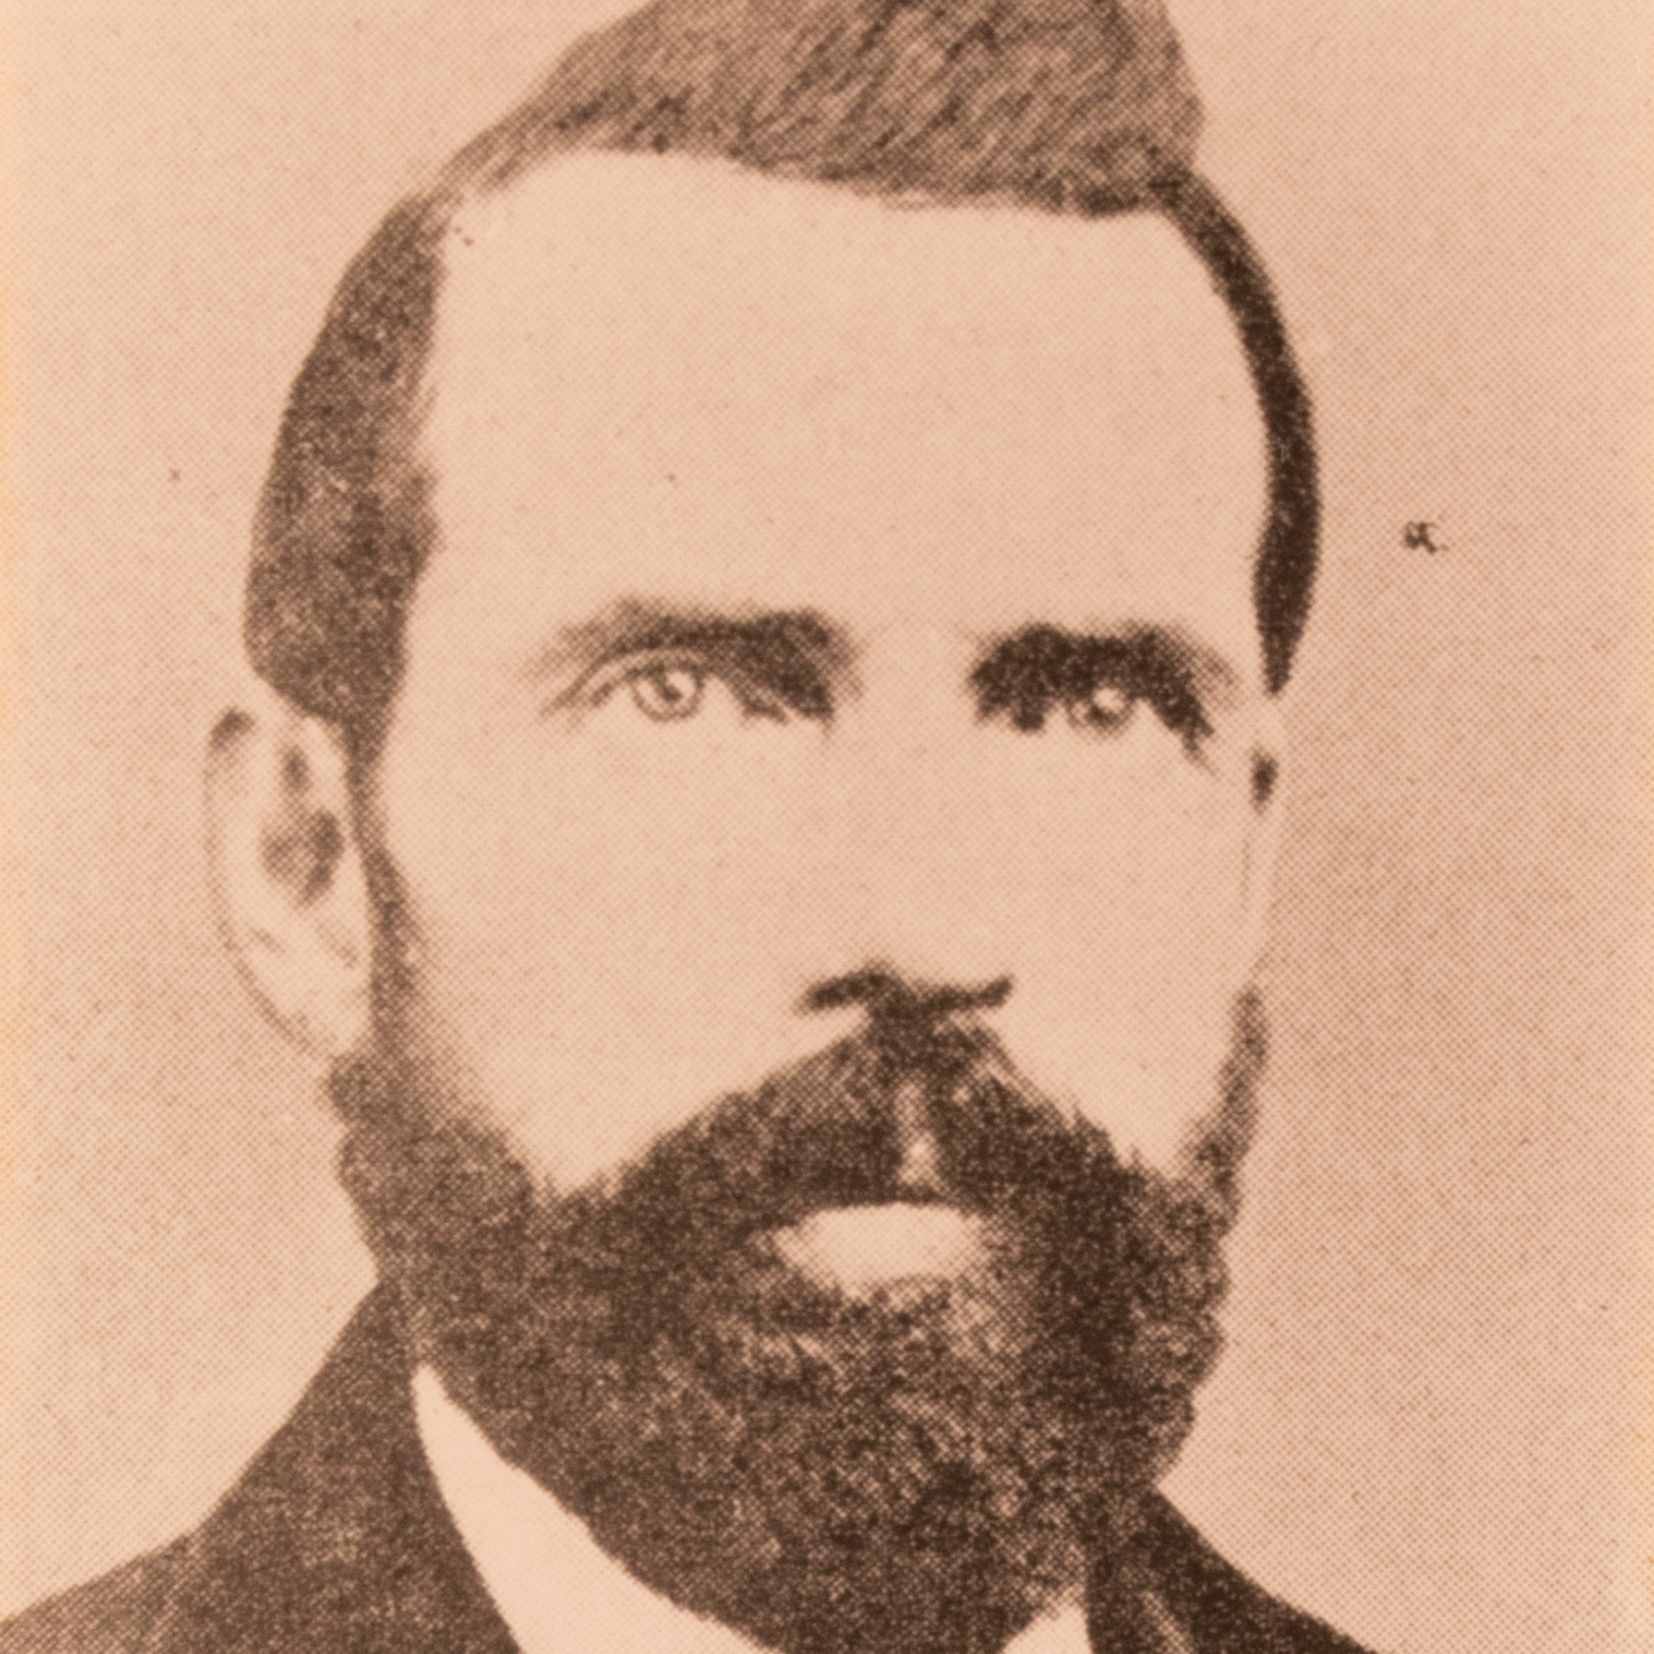 Mayor William H. Winn